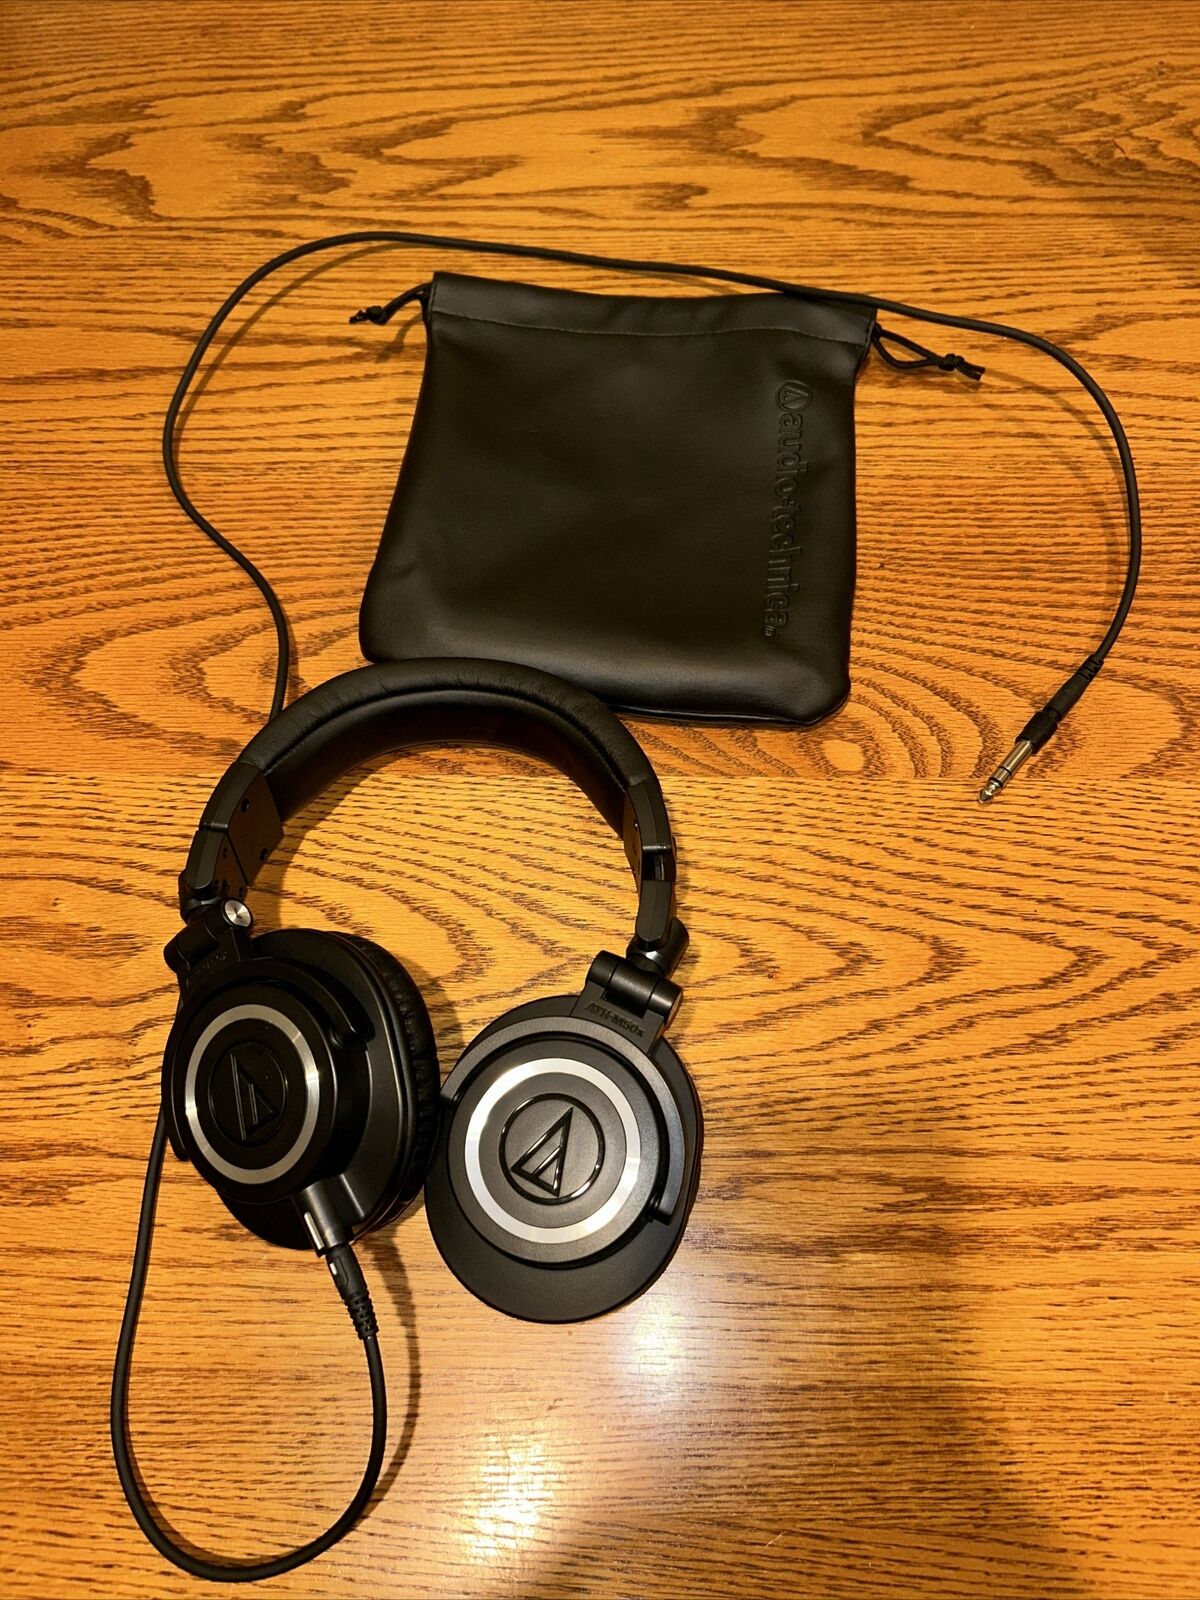 Audio-Technica ATH-M50x Professional Monitor Headphones - Black #ATH-M50X